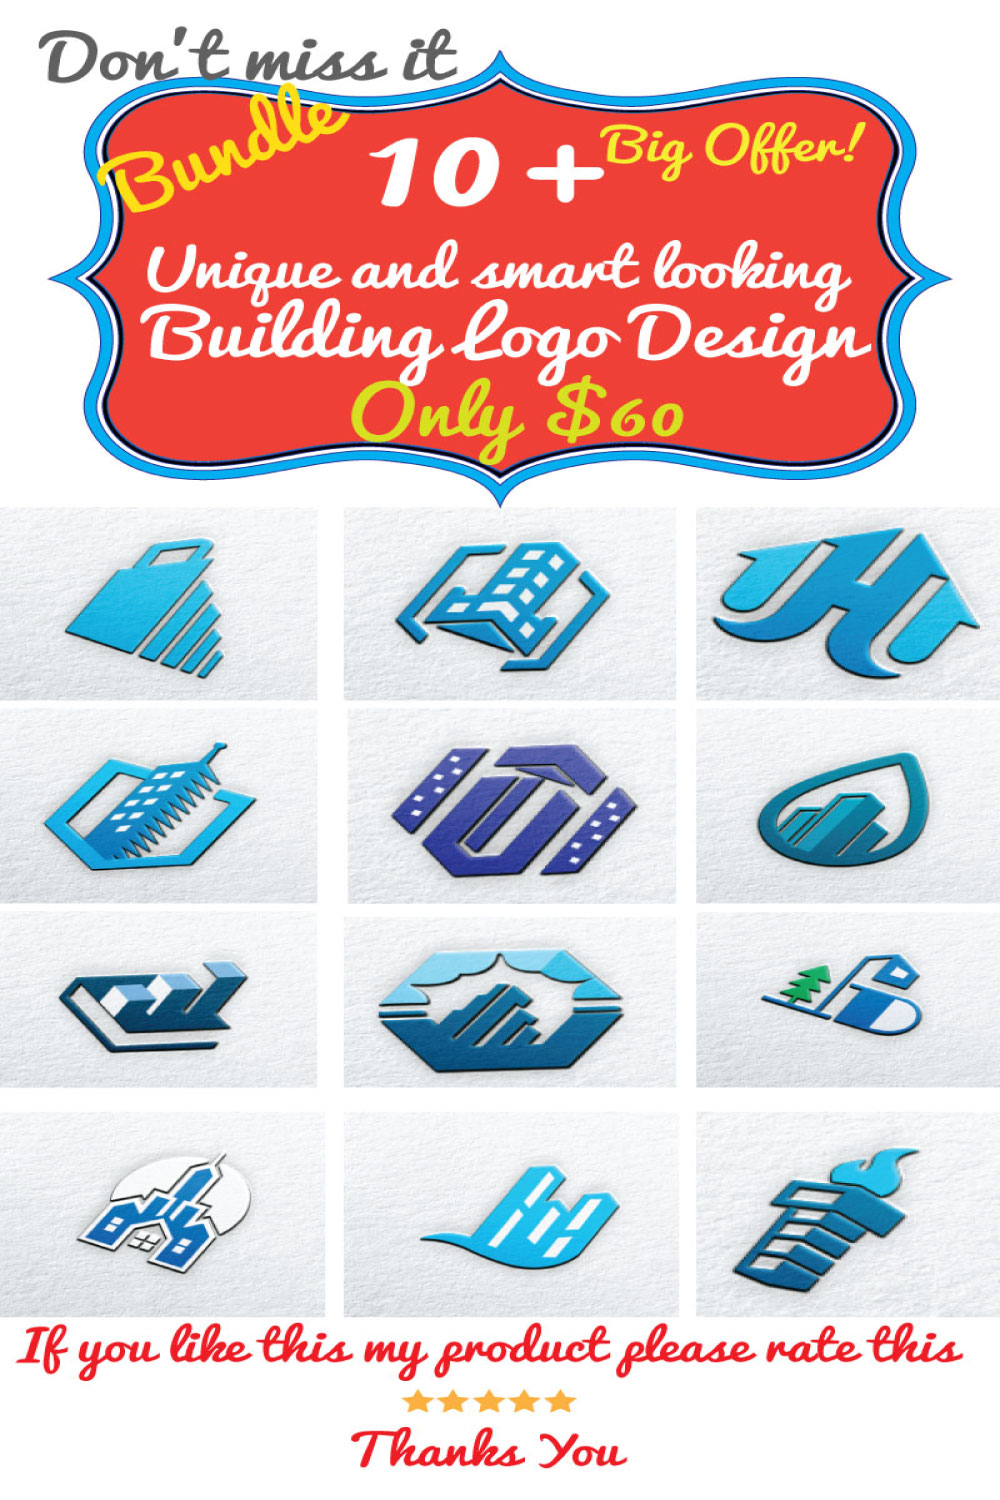 10+ Building logo design Bundle pinterest preview image.